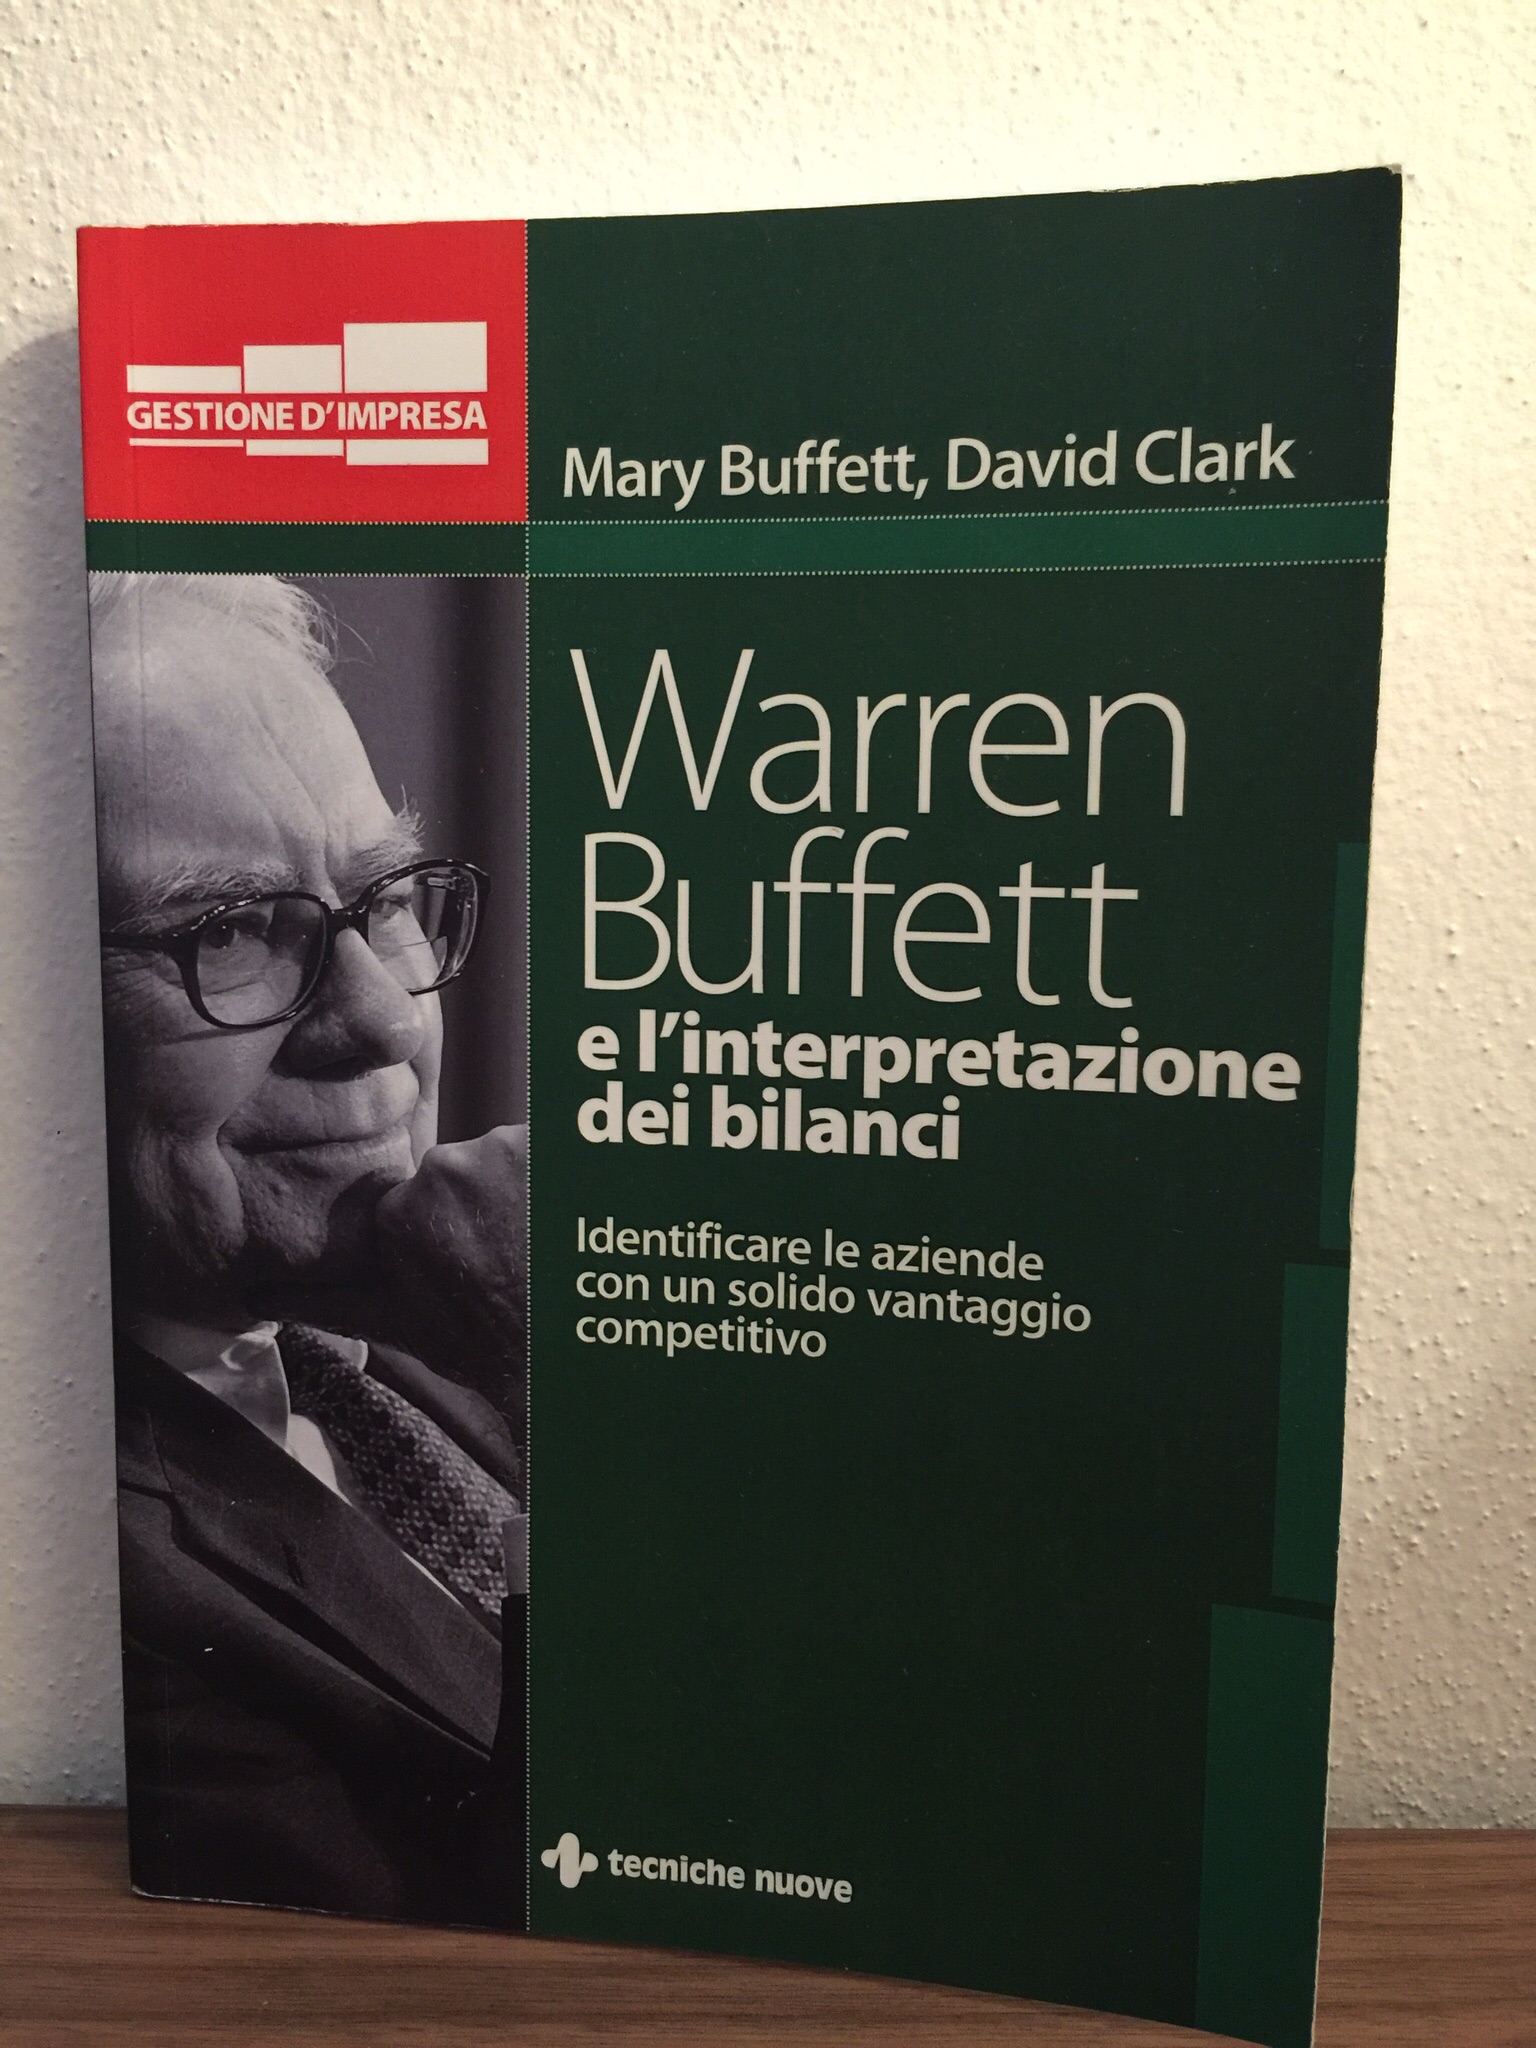 Warren Buffet e l’interpretazione dei bilanci – Mary Buffett David Clark